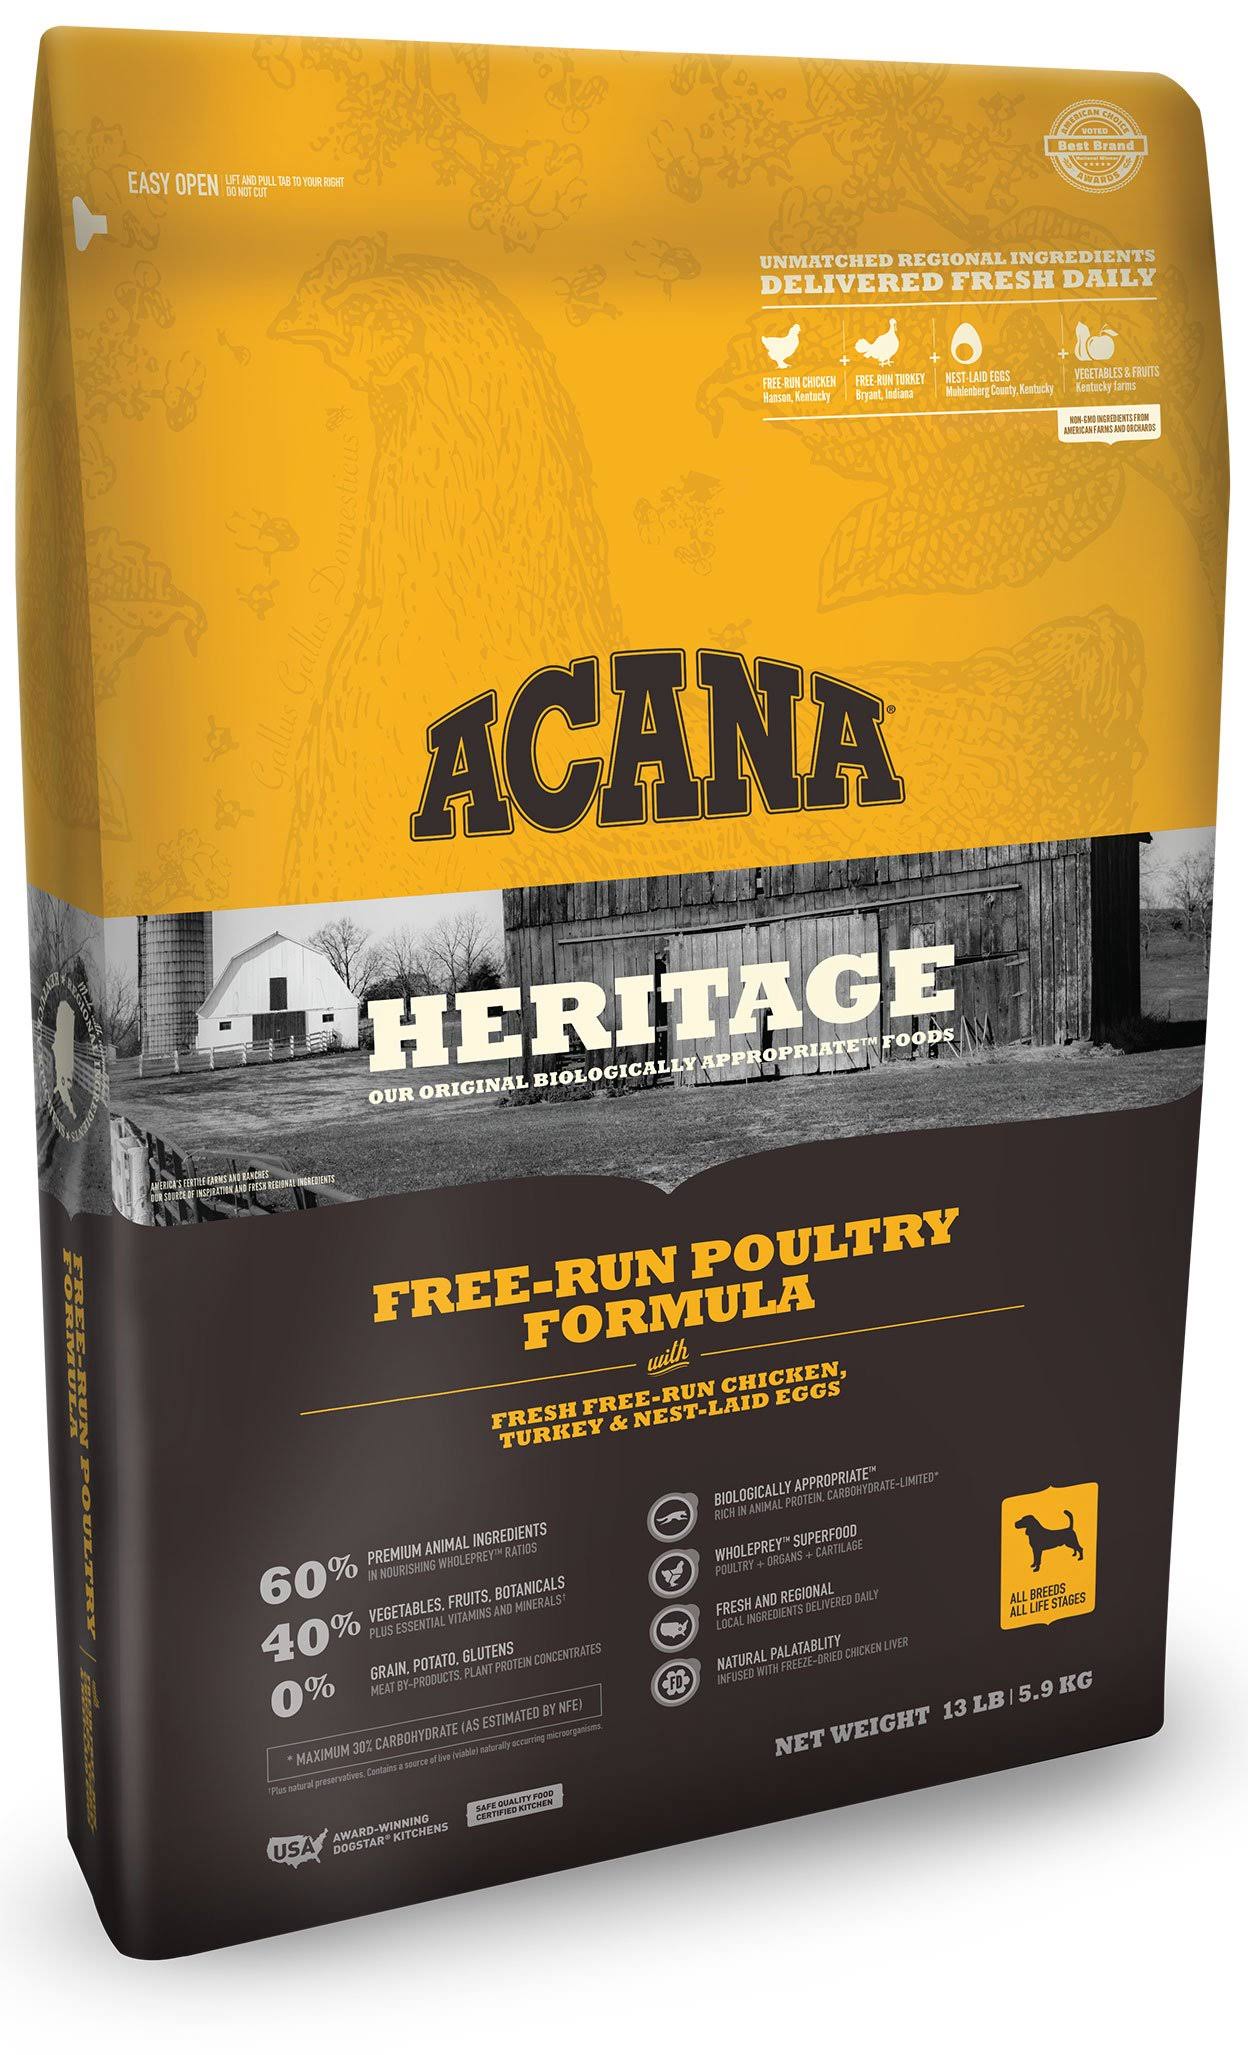 ACANA Heritage Free-Run Poultry Formula - 25lb